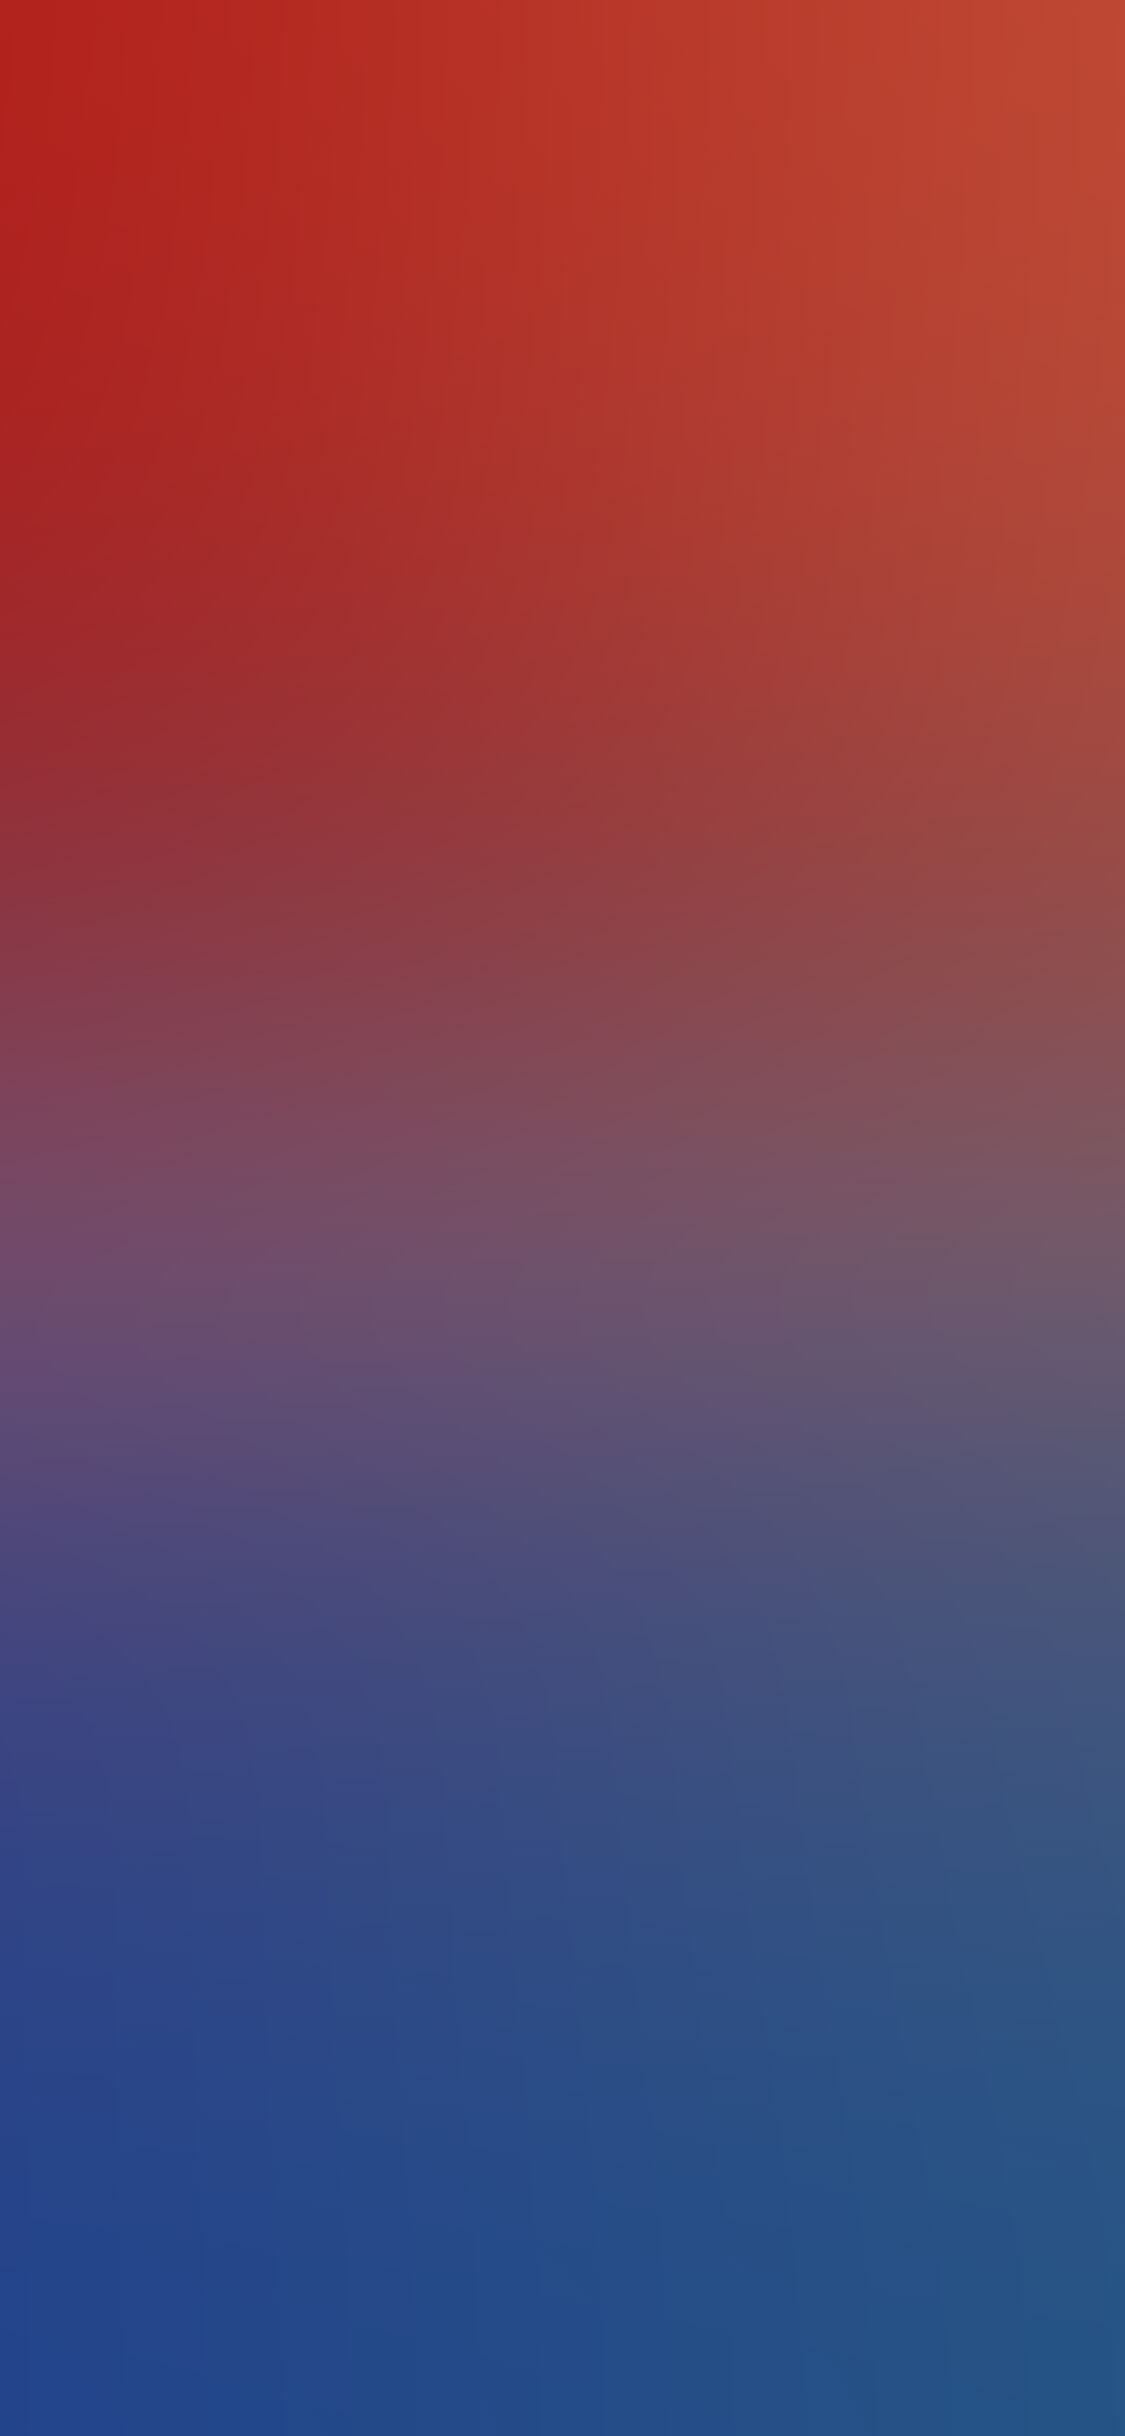 iPhone X wallpaper. blue orange blur gradation